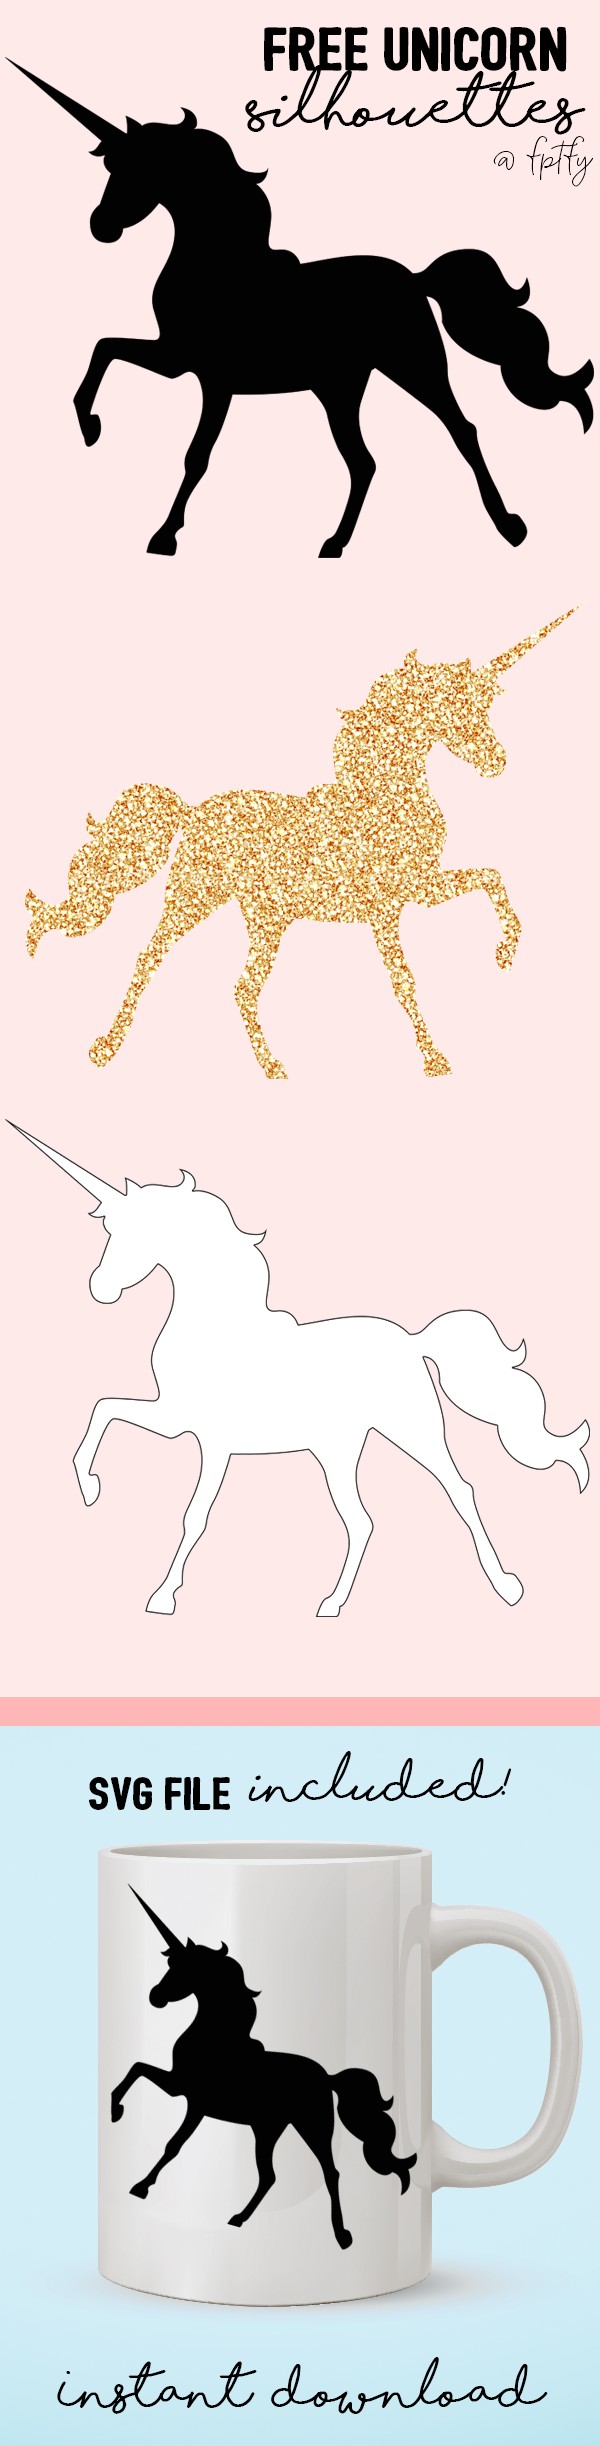 free_unicorn_silhouette-Web-1